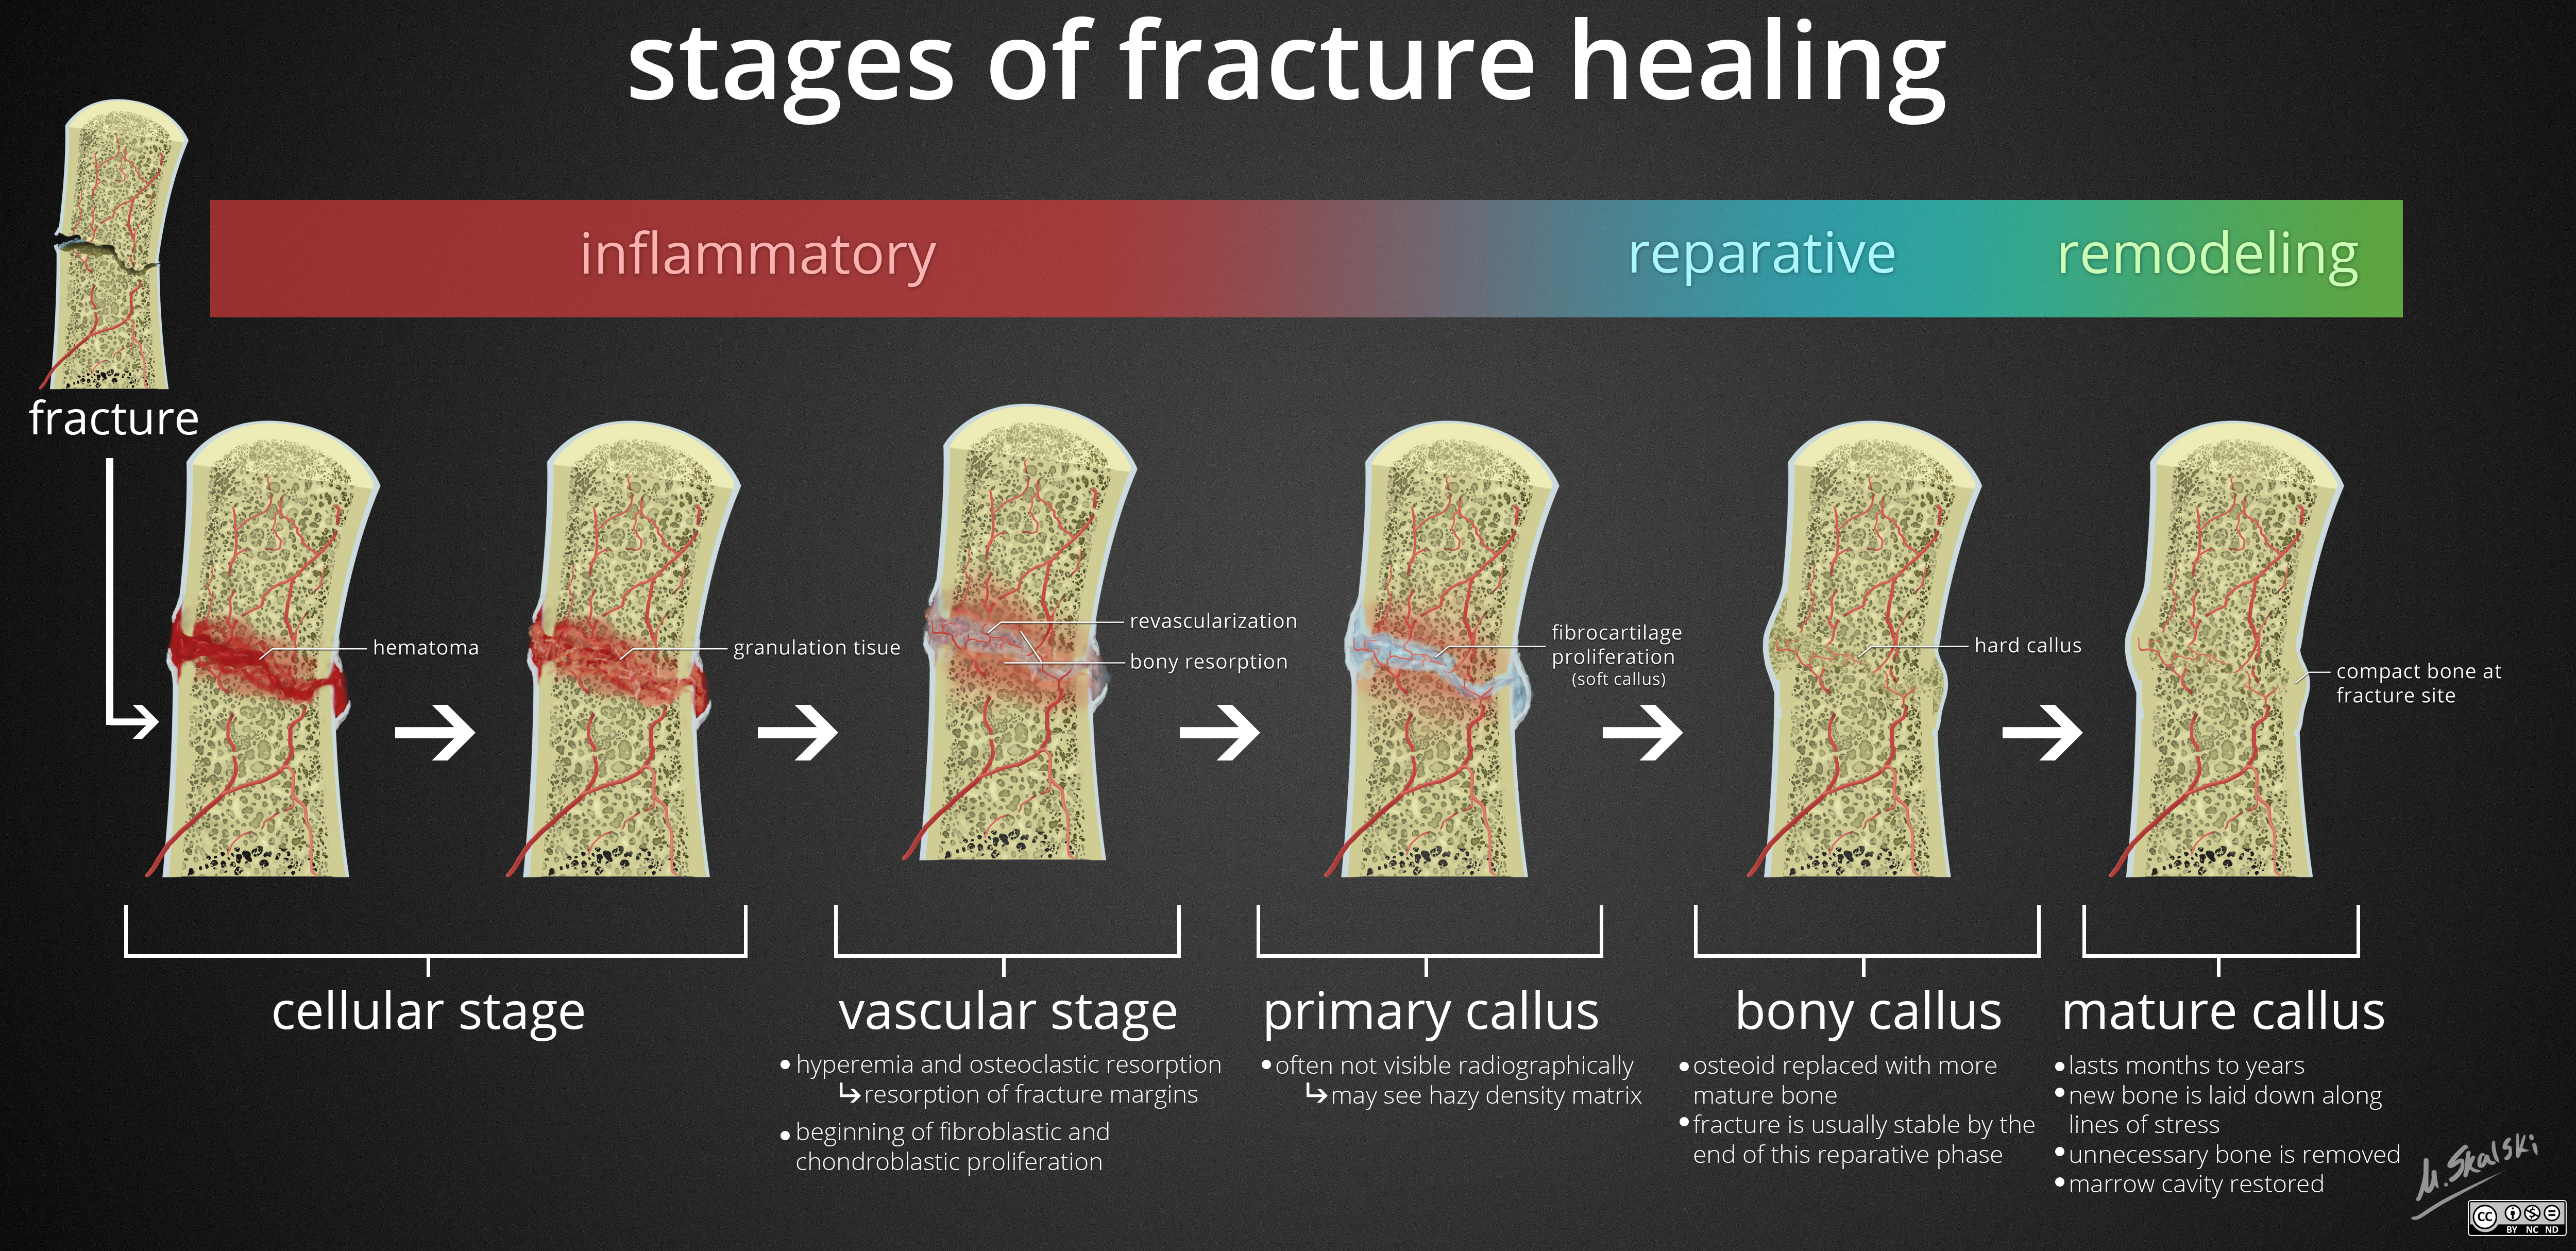 fracture-healing-diagrams.jpg